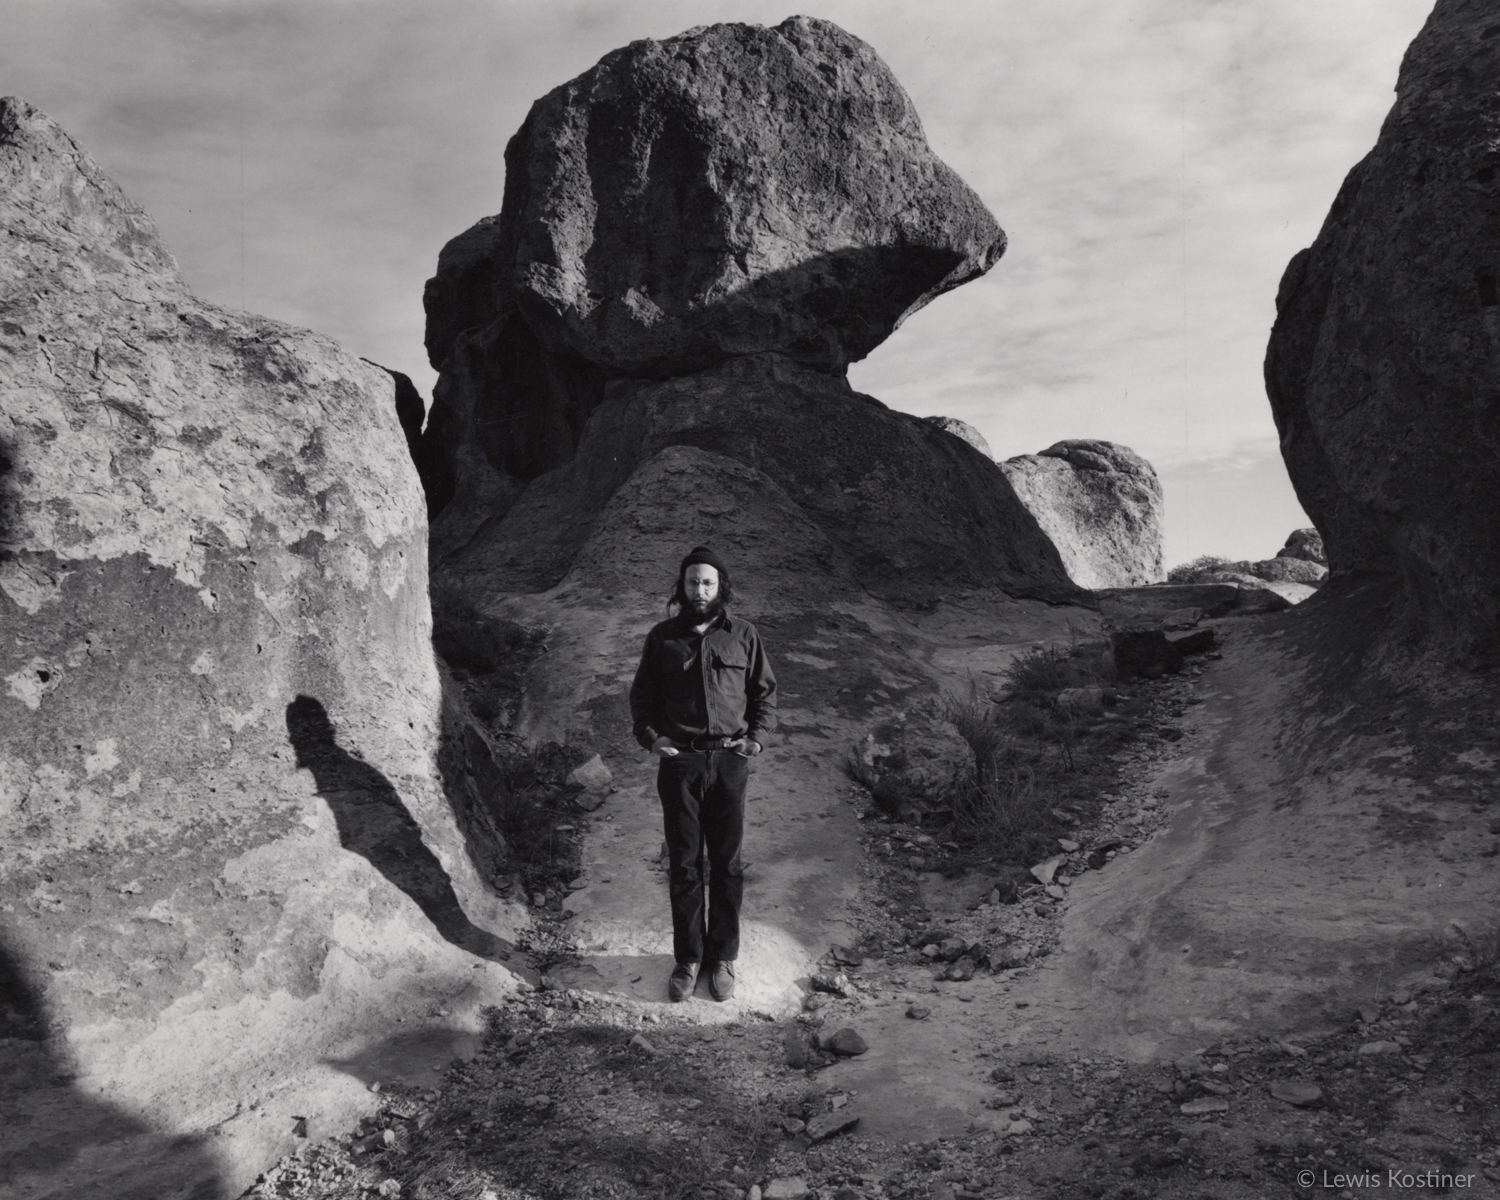 Michael Lutch, City of Rocks, Deming, NM, 1974